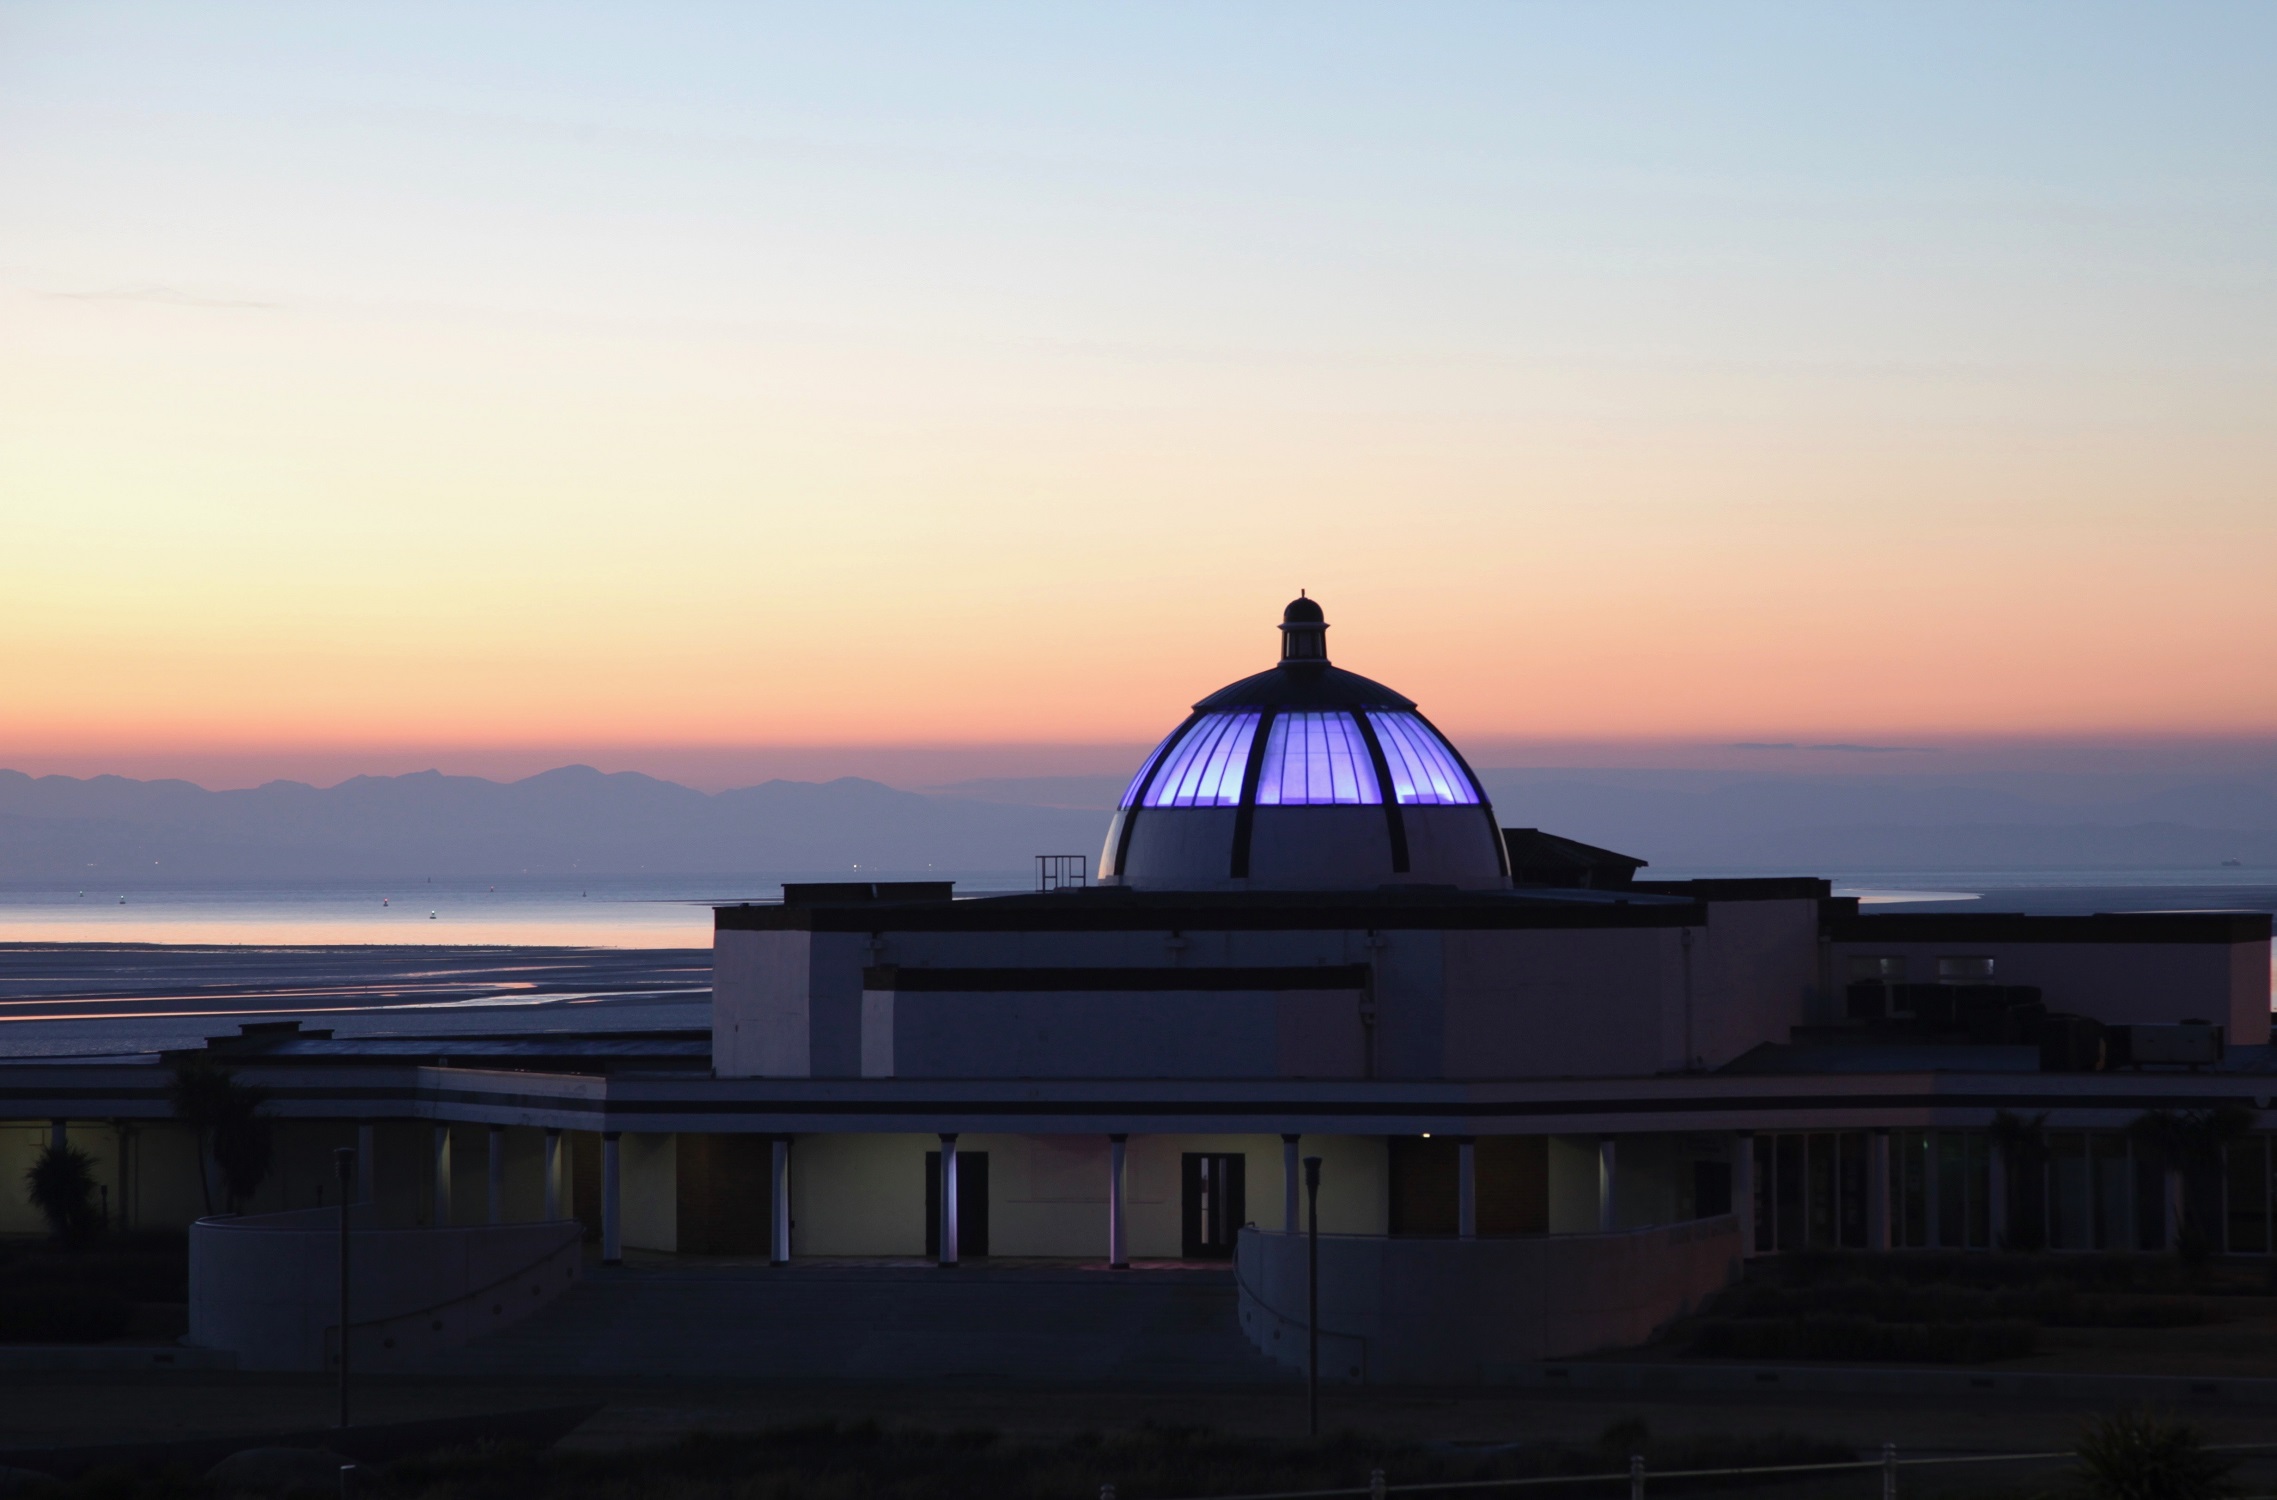 Marine Hall blue dome at sunset